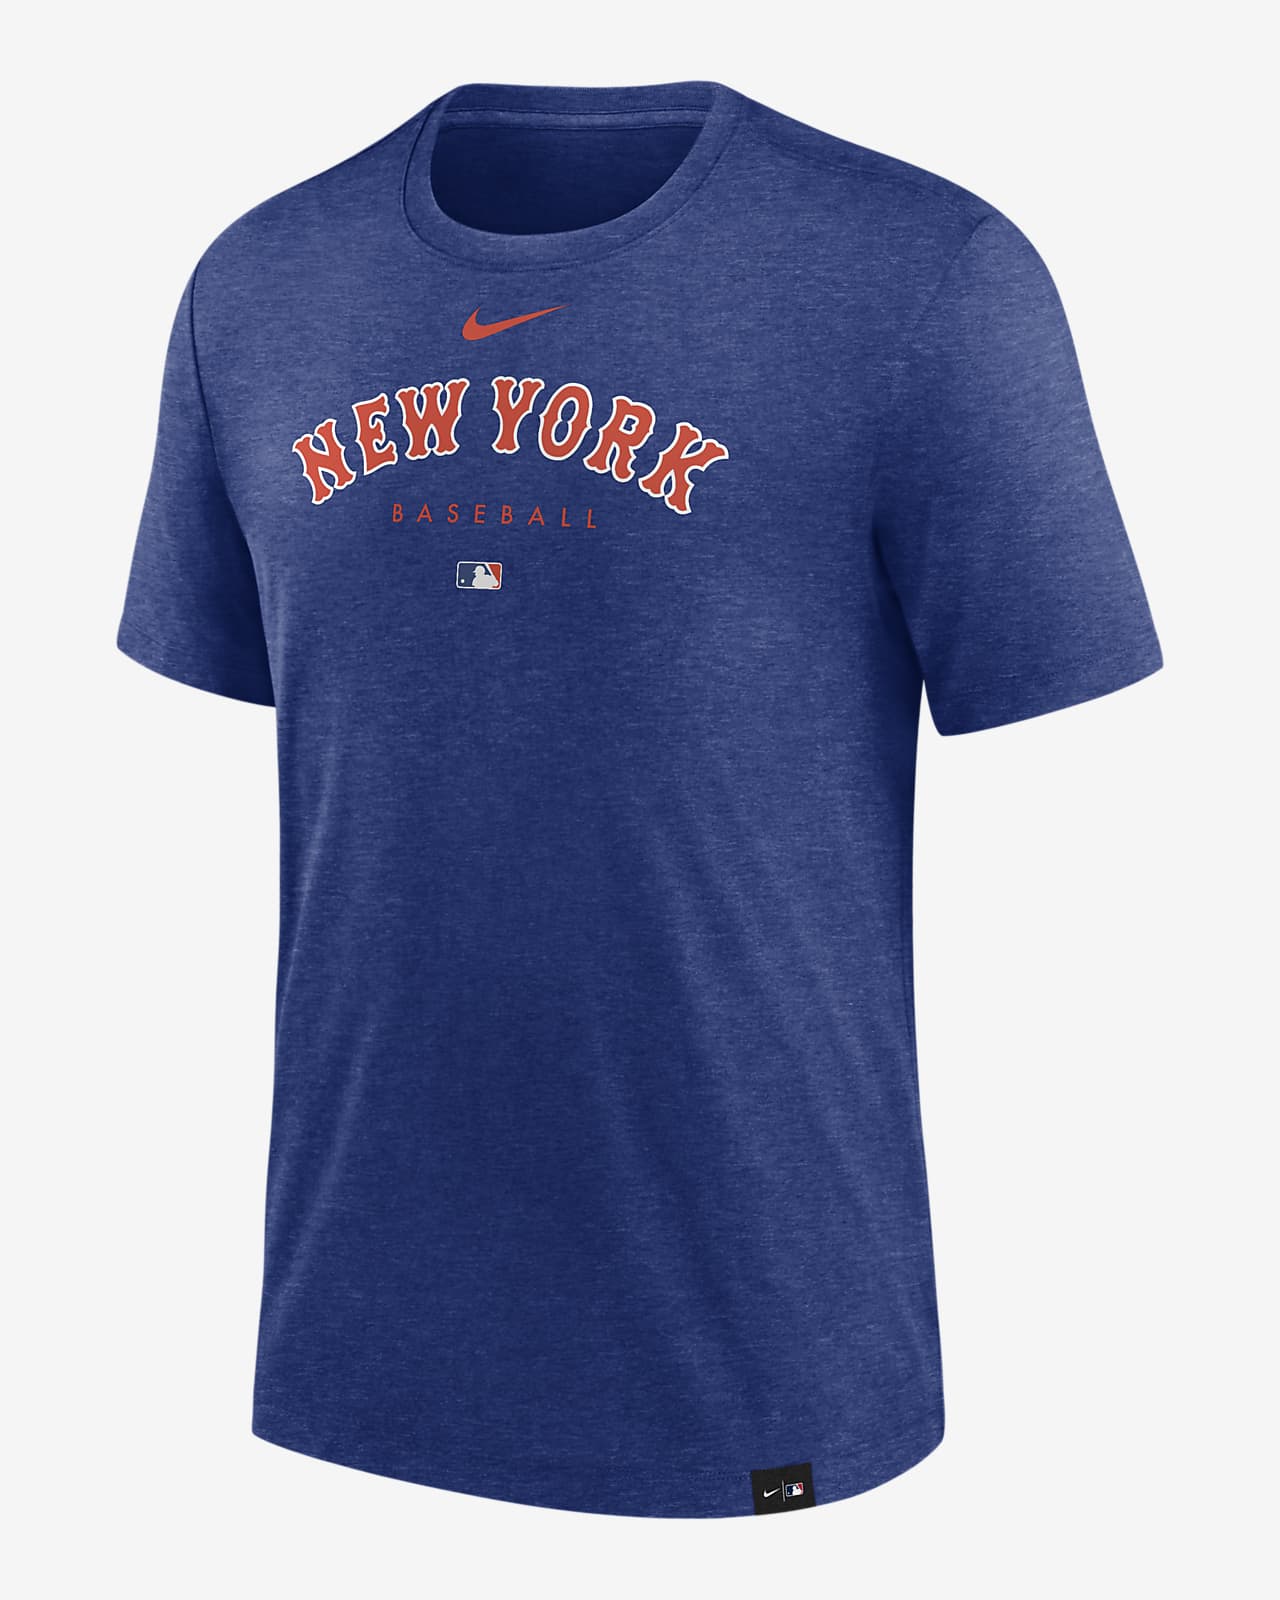 Nike Dri-FIT Early Work (MLB New York Mets) Men's T-Shirt